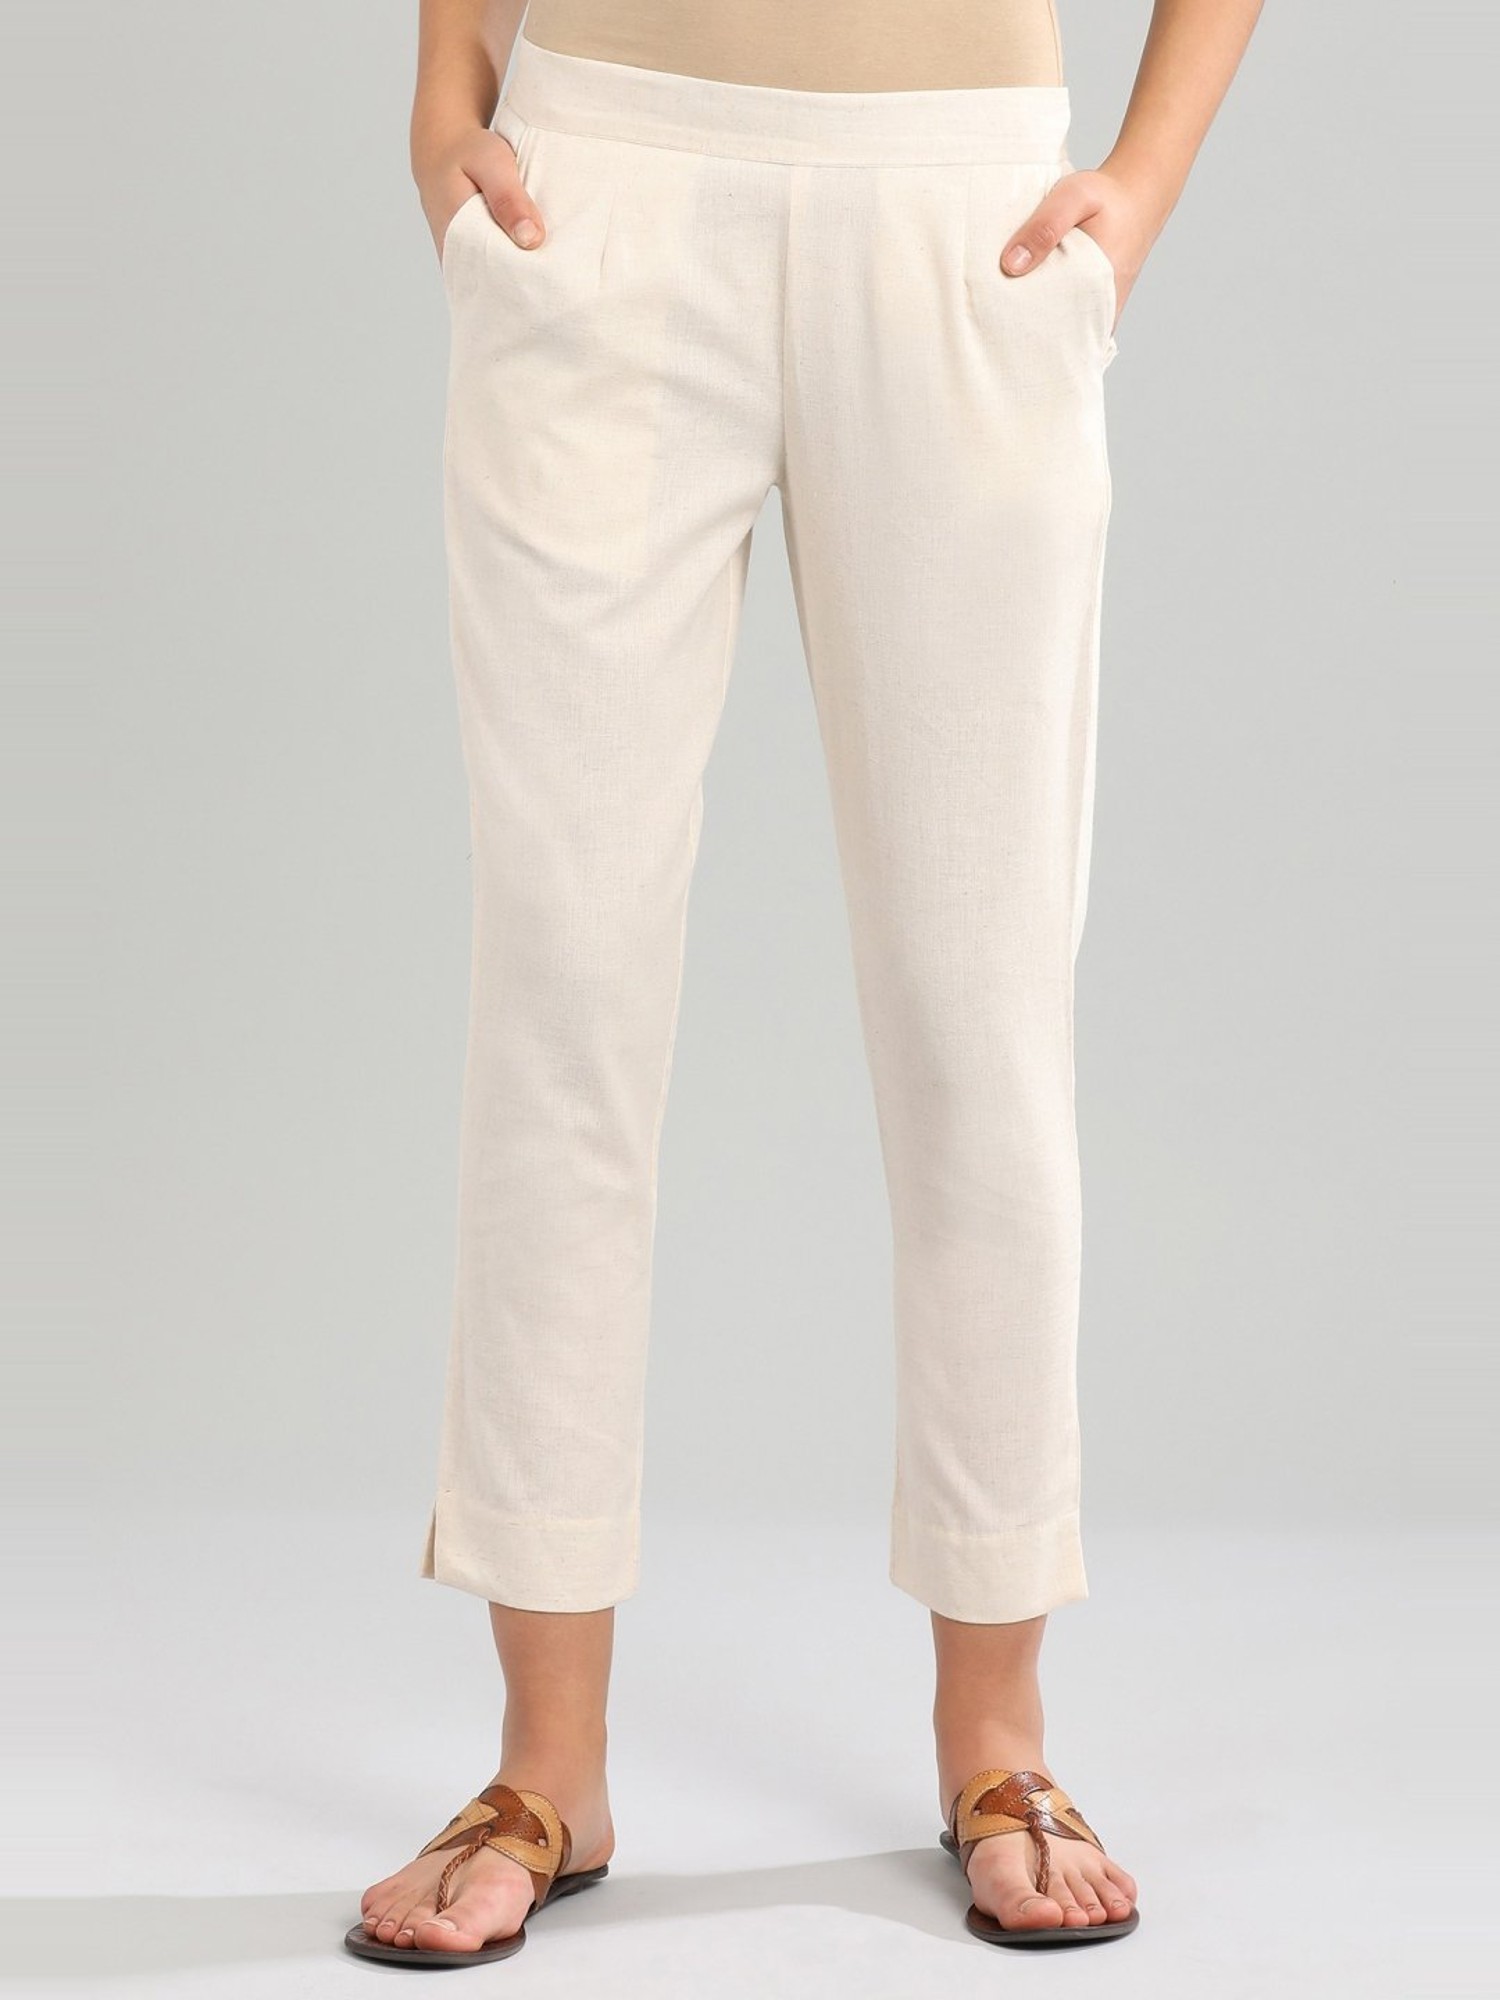 Aurelia White Sequin Shorts - ShopperBoard